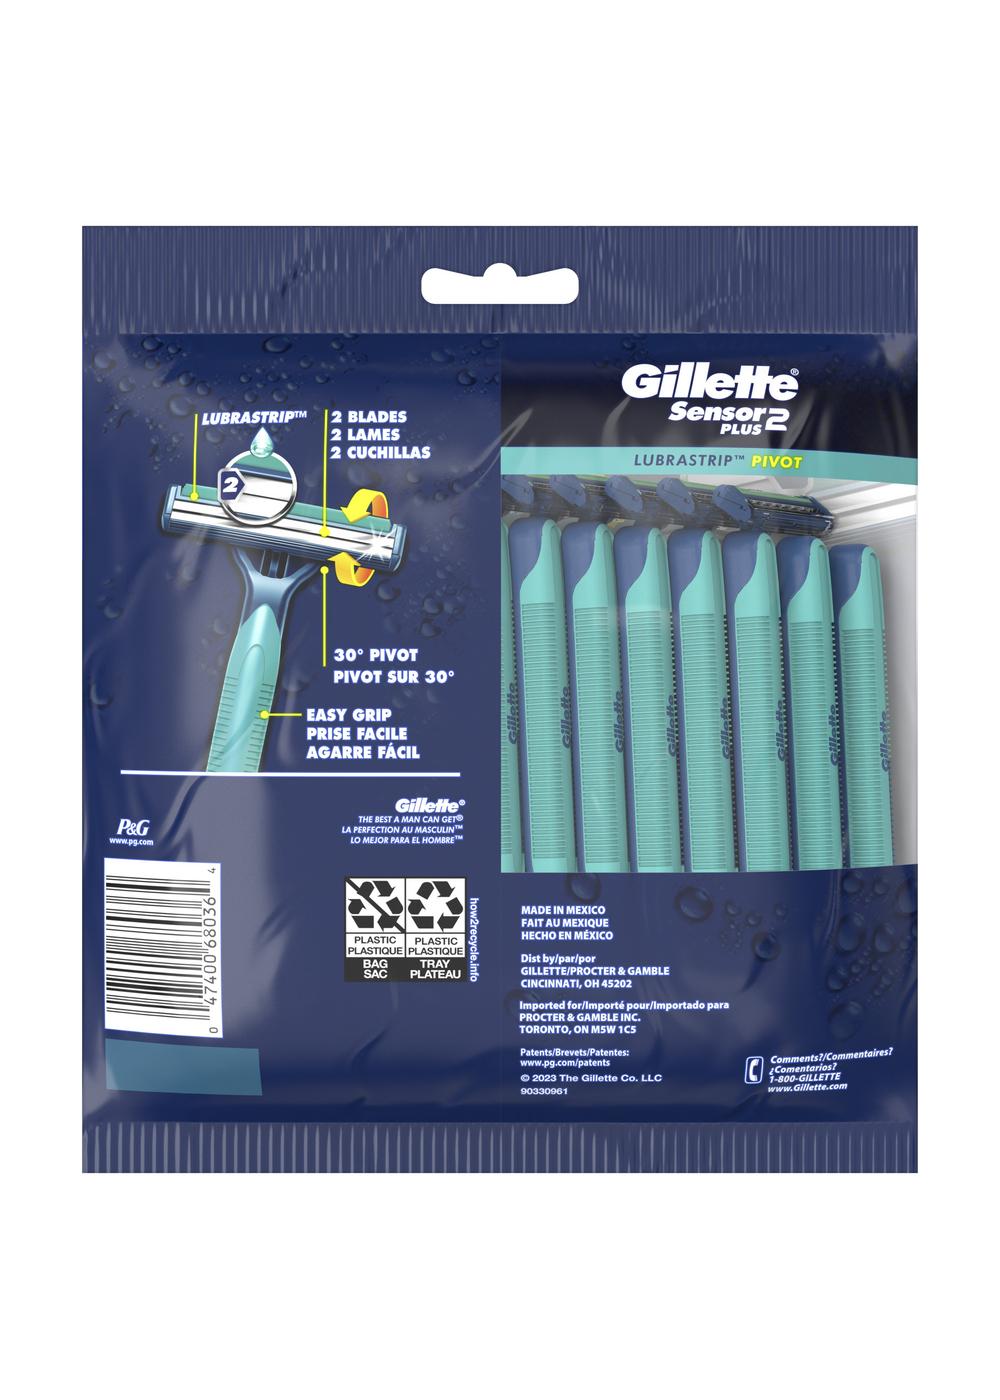 Gillette Sensor 2 Plus Disposable Razors; image 2 of 2